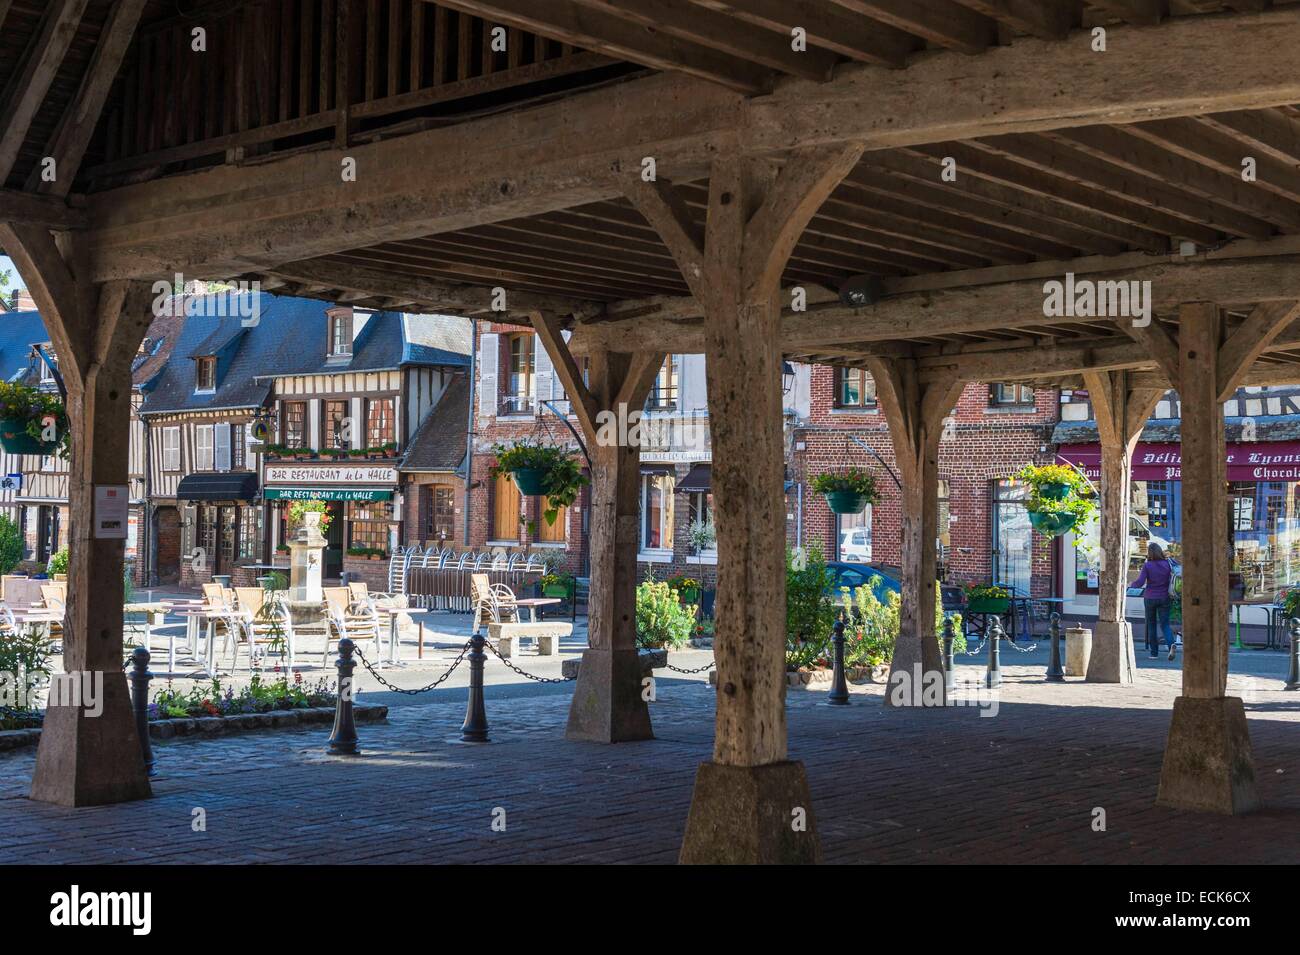 Frankreich, Eure, Lyons-la-ForΩt, mit der Bezeichnung Les Plus Beaux Dörfer de France, 17. Jahrhundert bedeckt Marktplatz Stockfoto